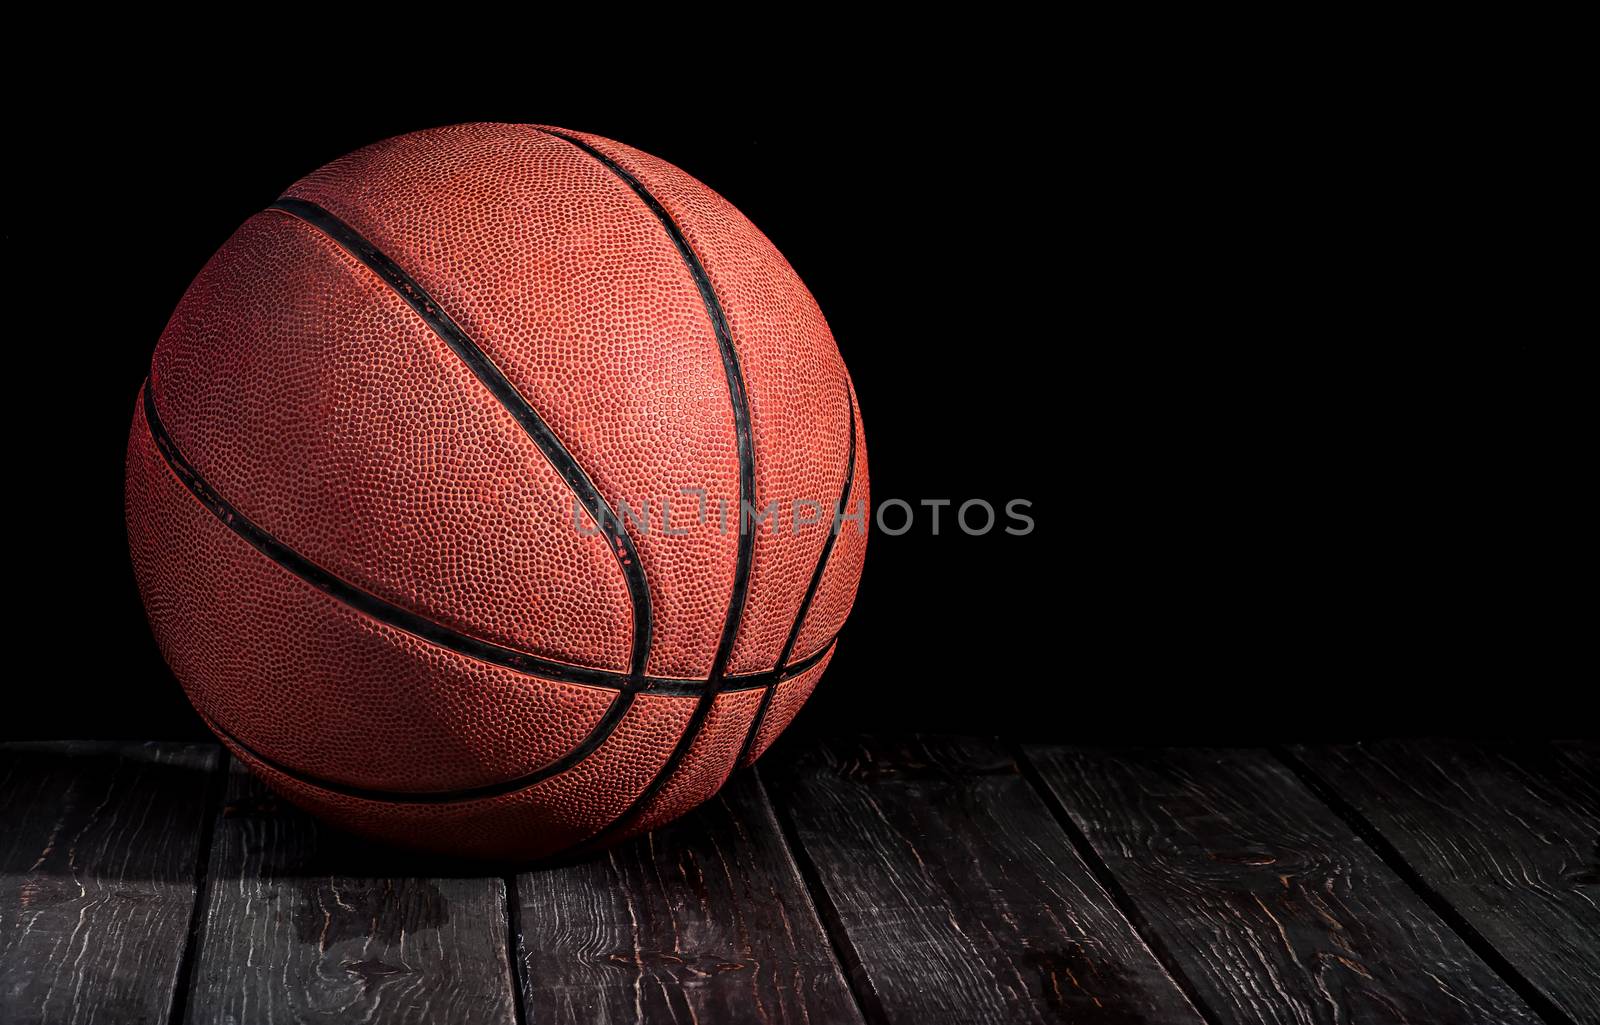 Basketball ball on a wooden floor by Cipariss